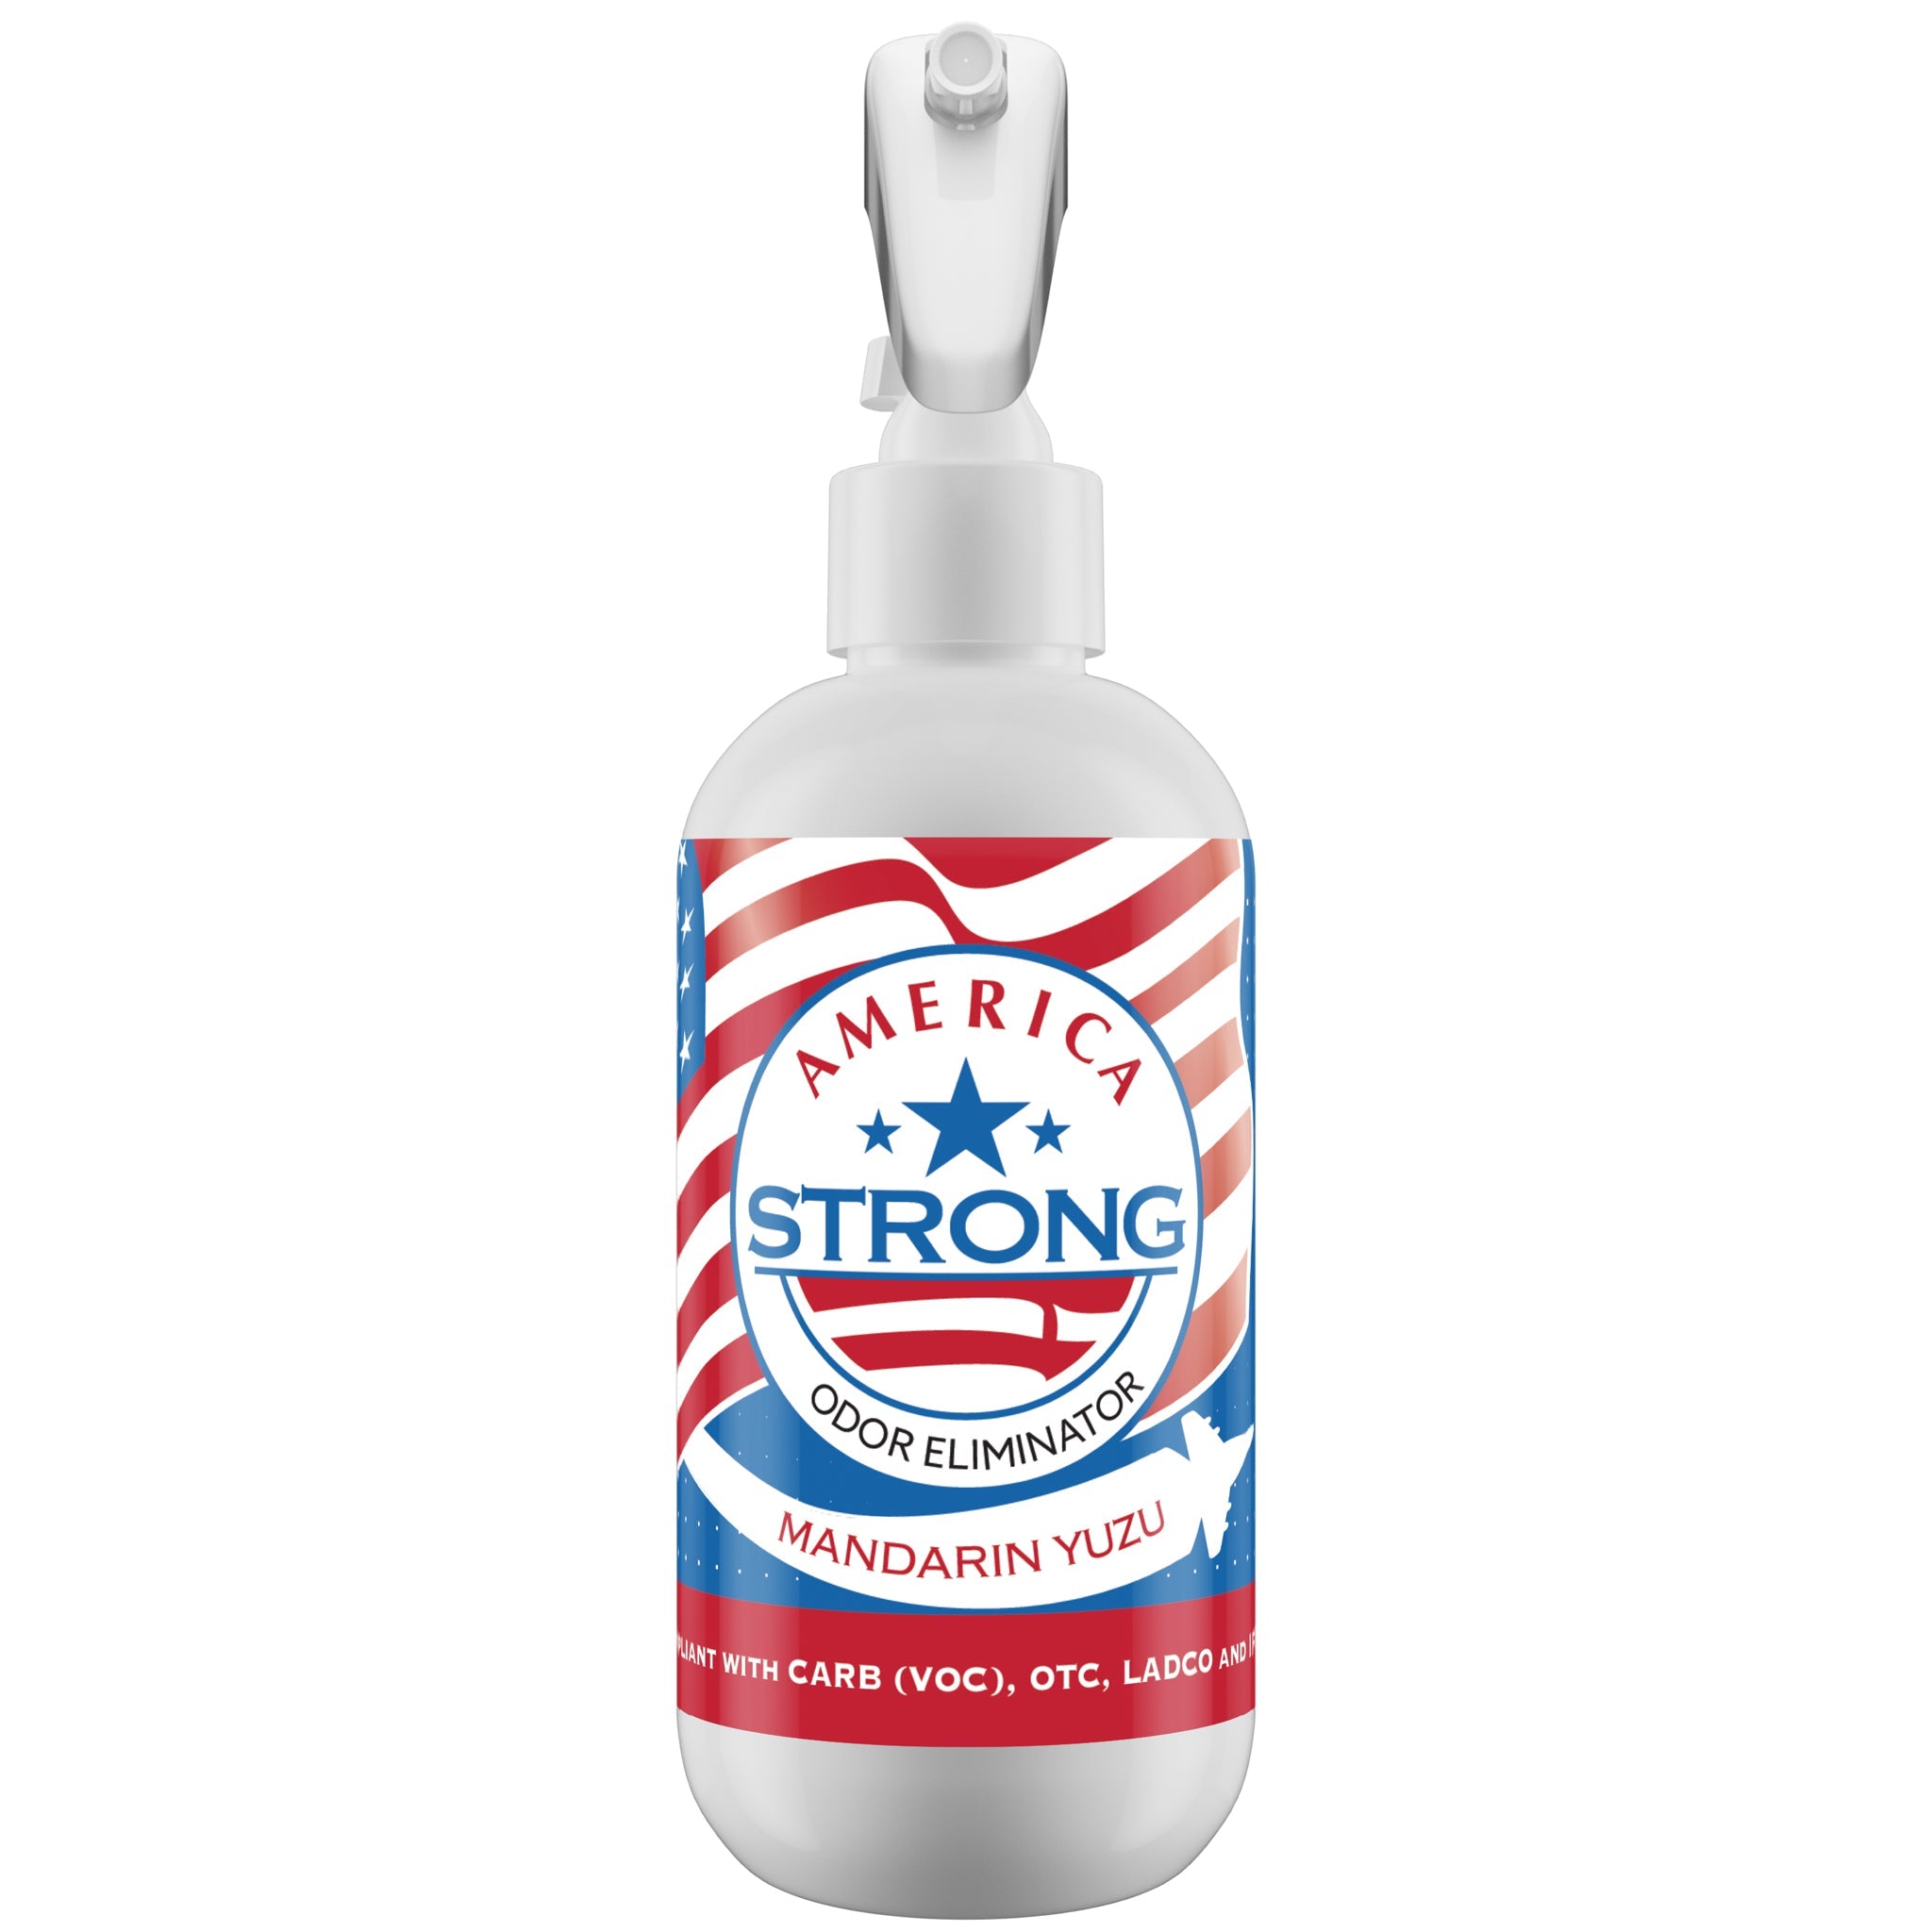 America Strong Odor Eliminator - Mandarin Yuzu Scent Size: 8.0oz